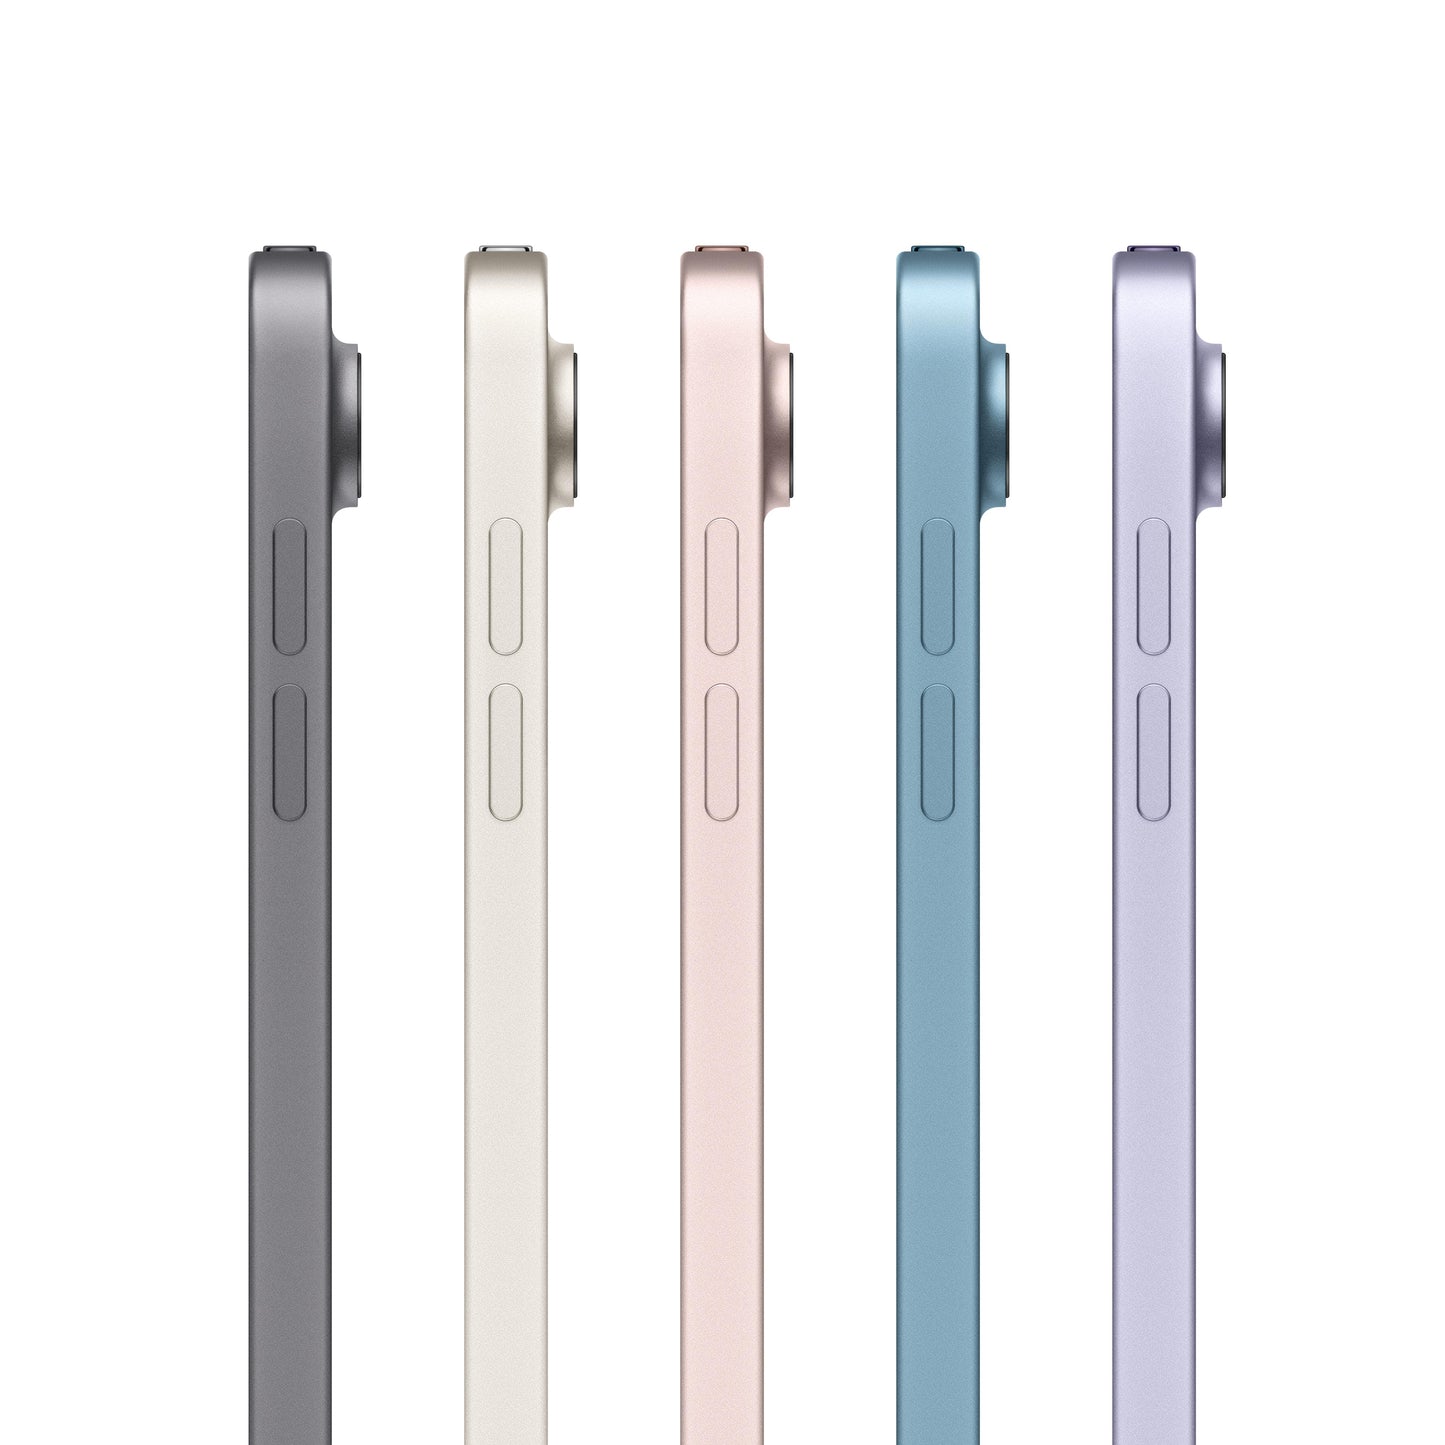 2022 iPad Air Wi-Fi 256 جيجابايت - أزرق (الجيل الخامس)